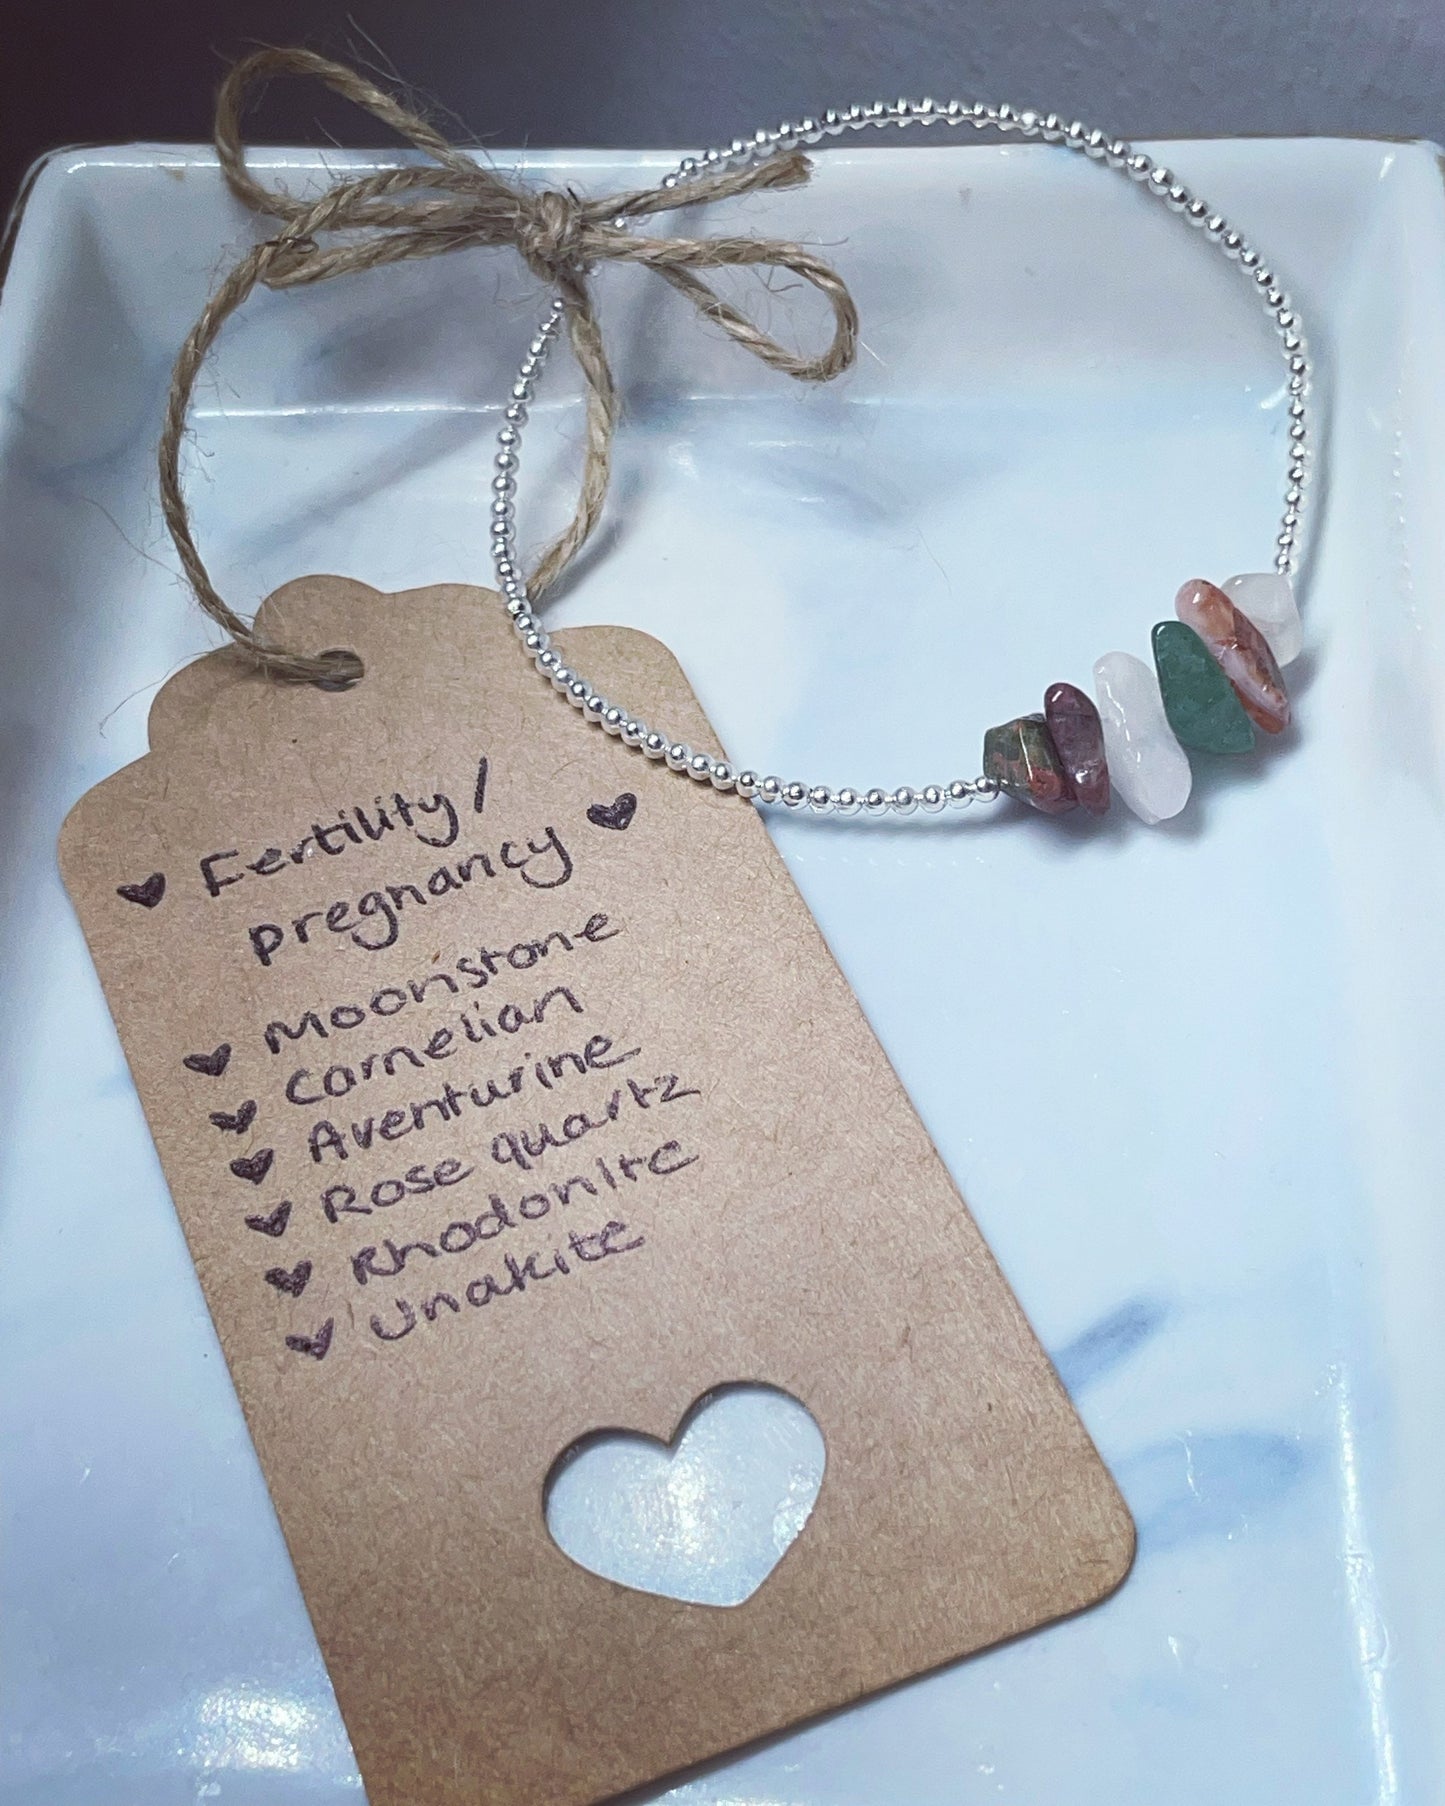 Fertility /pregnancy/ hormone balancing crystal bracelet